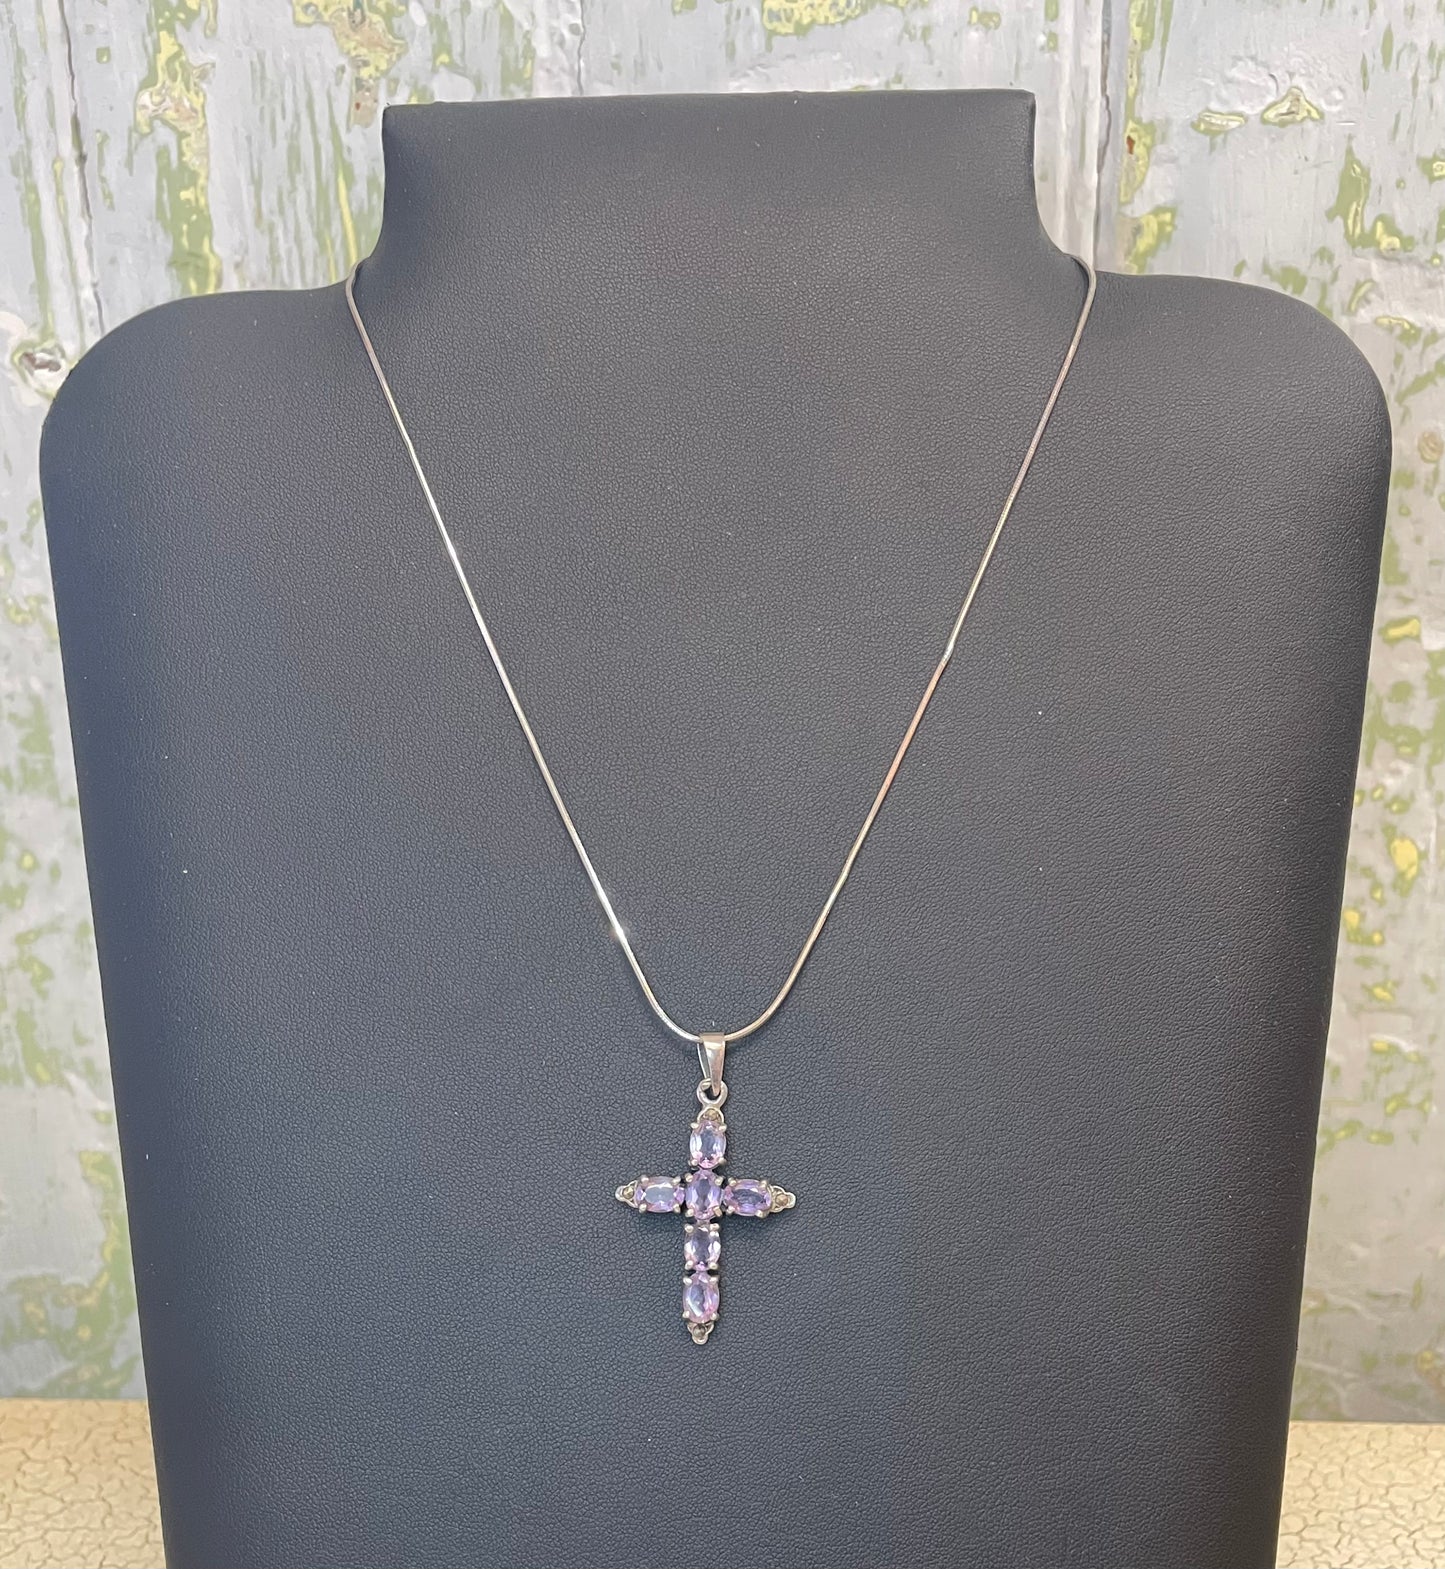 Silver amethyst cross necklace